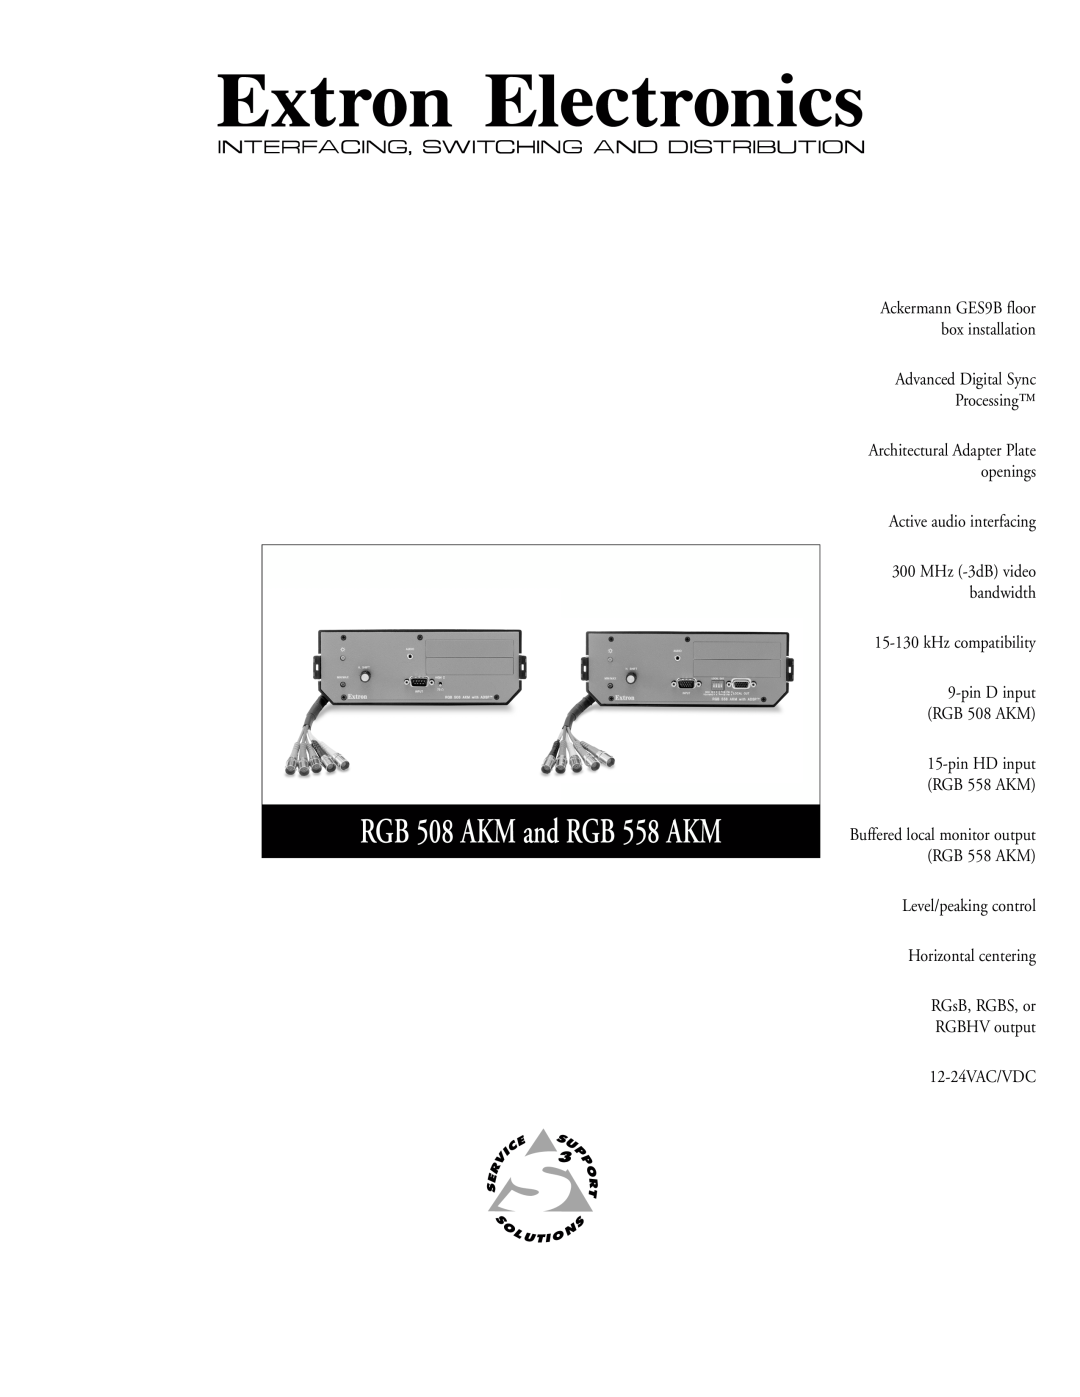 Extron electronic manual RGB 508 AKM and RGB 558 AKM, Active audio interfacing, kHz compatibility 